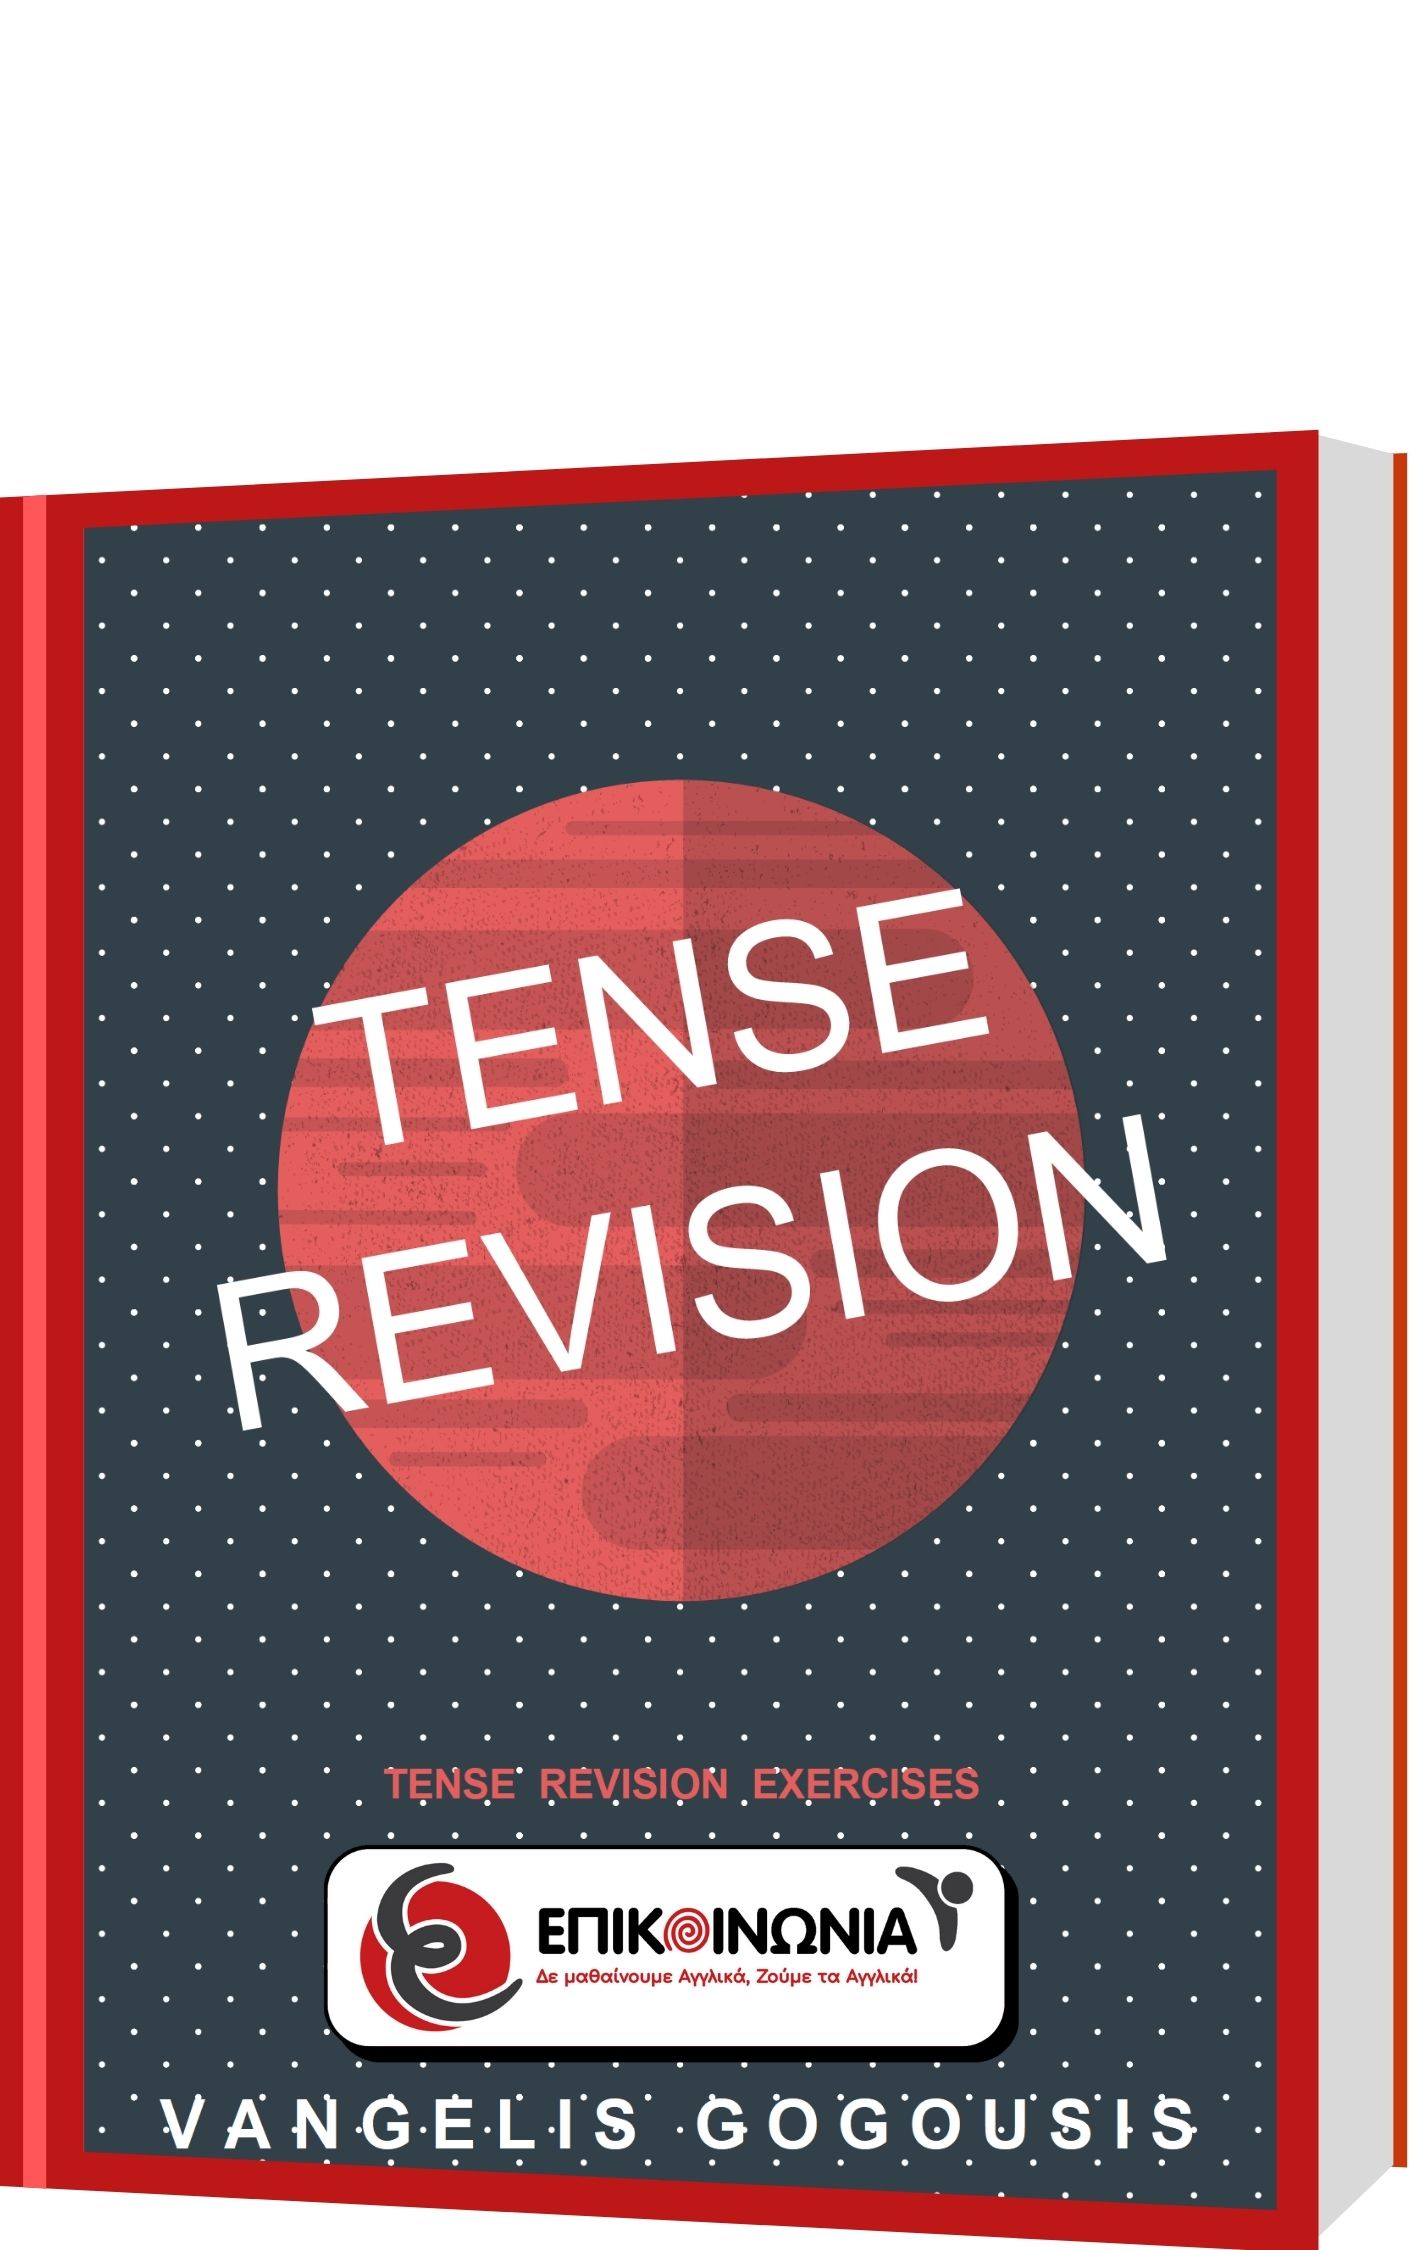 Tense Revision exercises